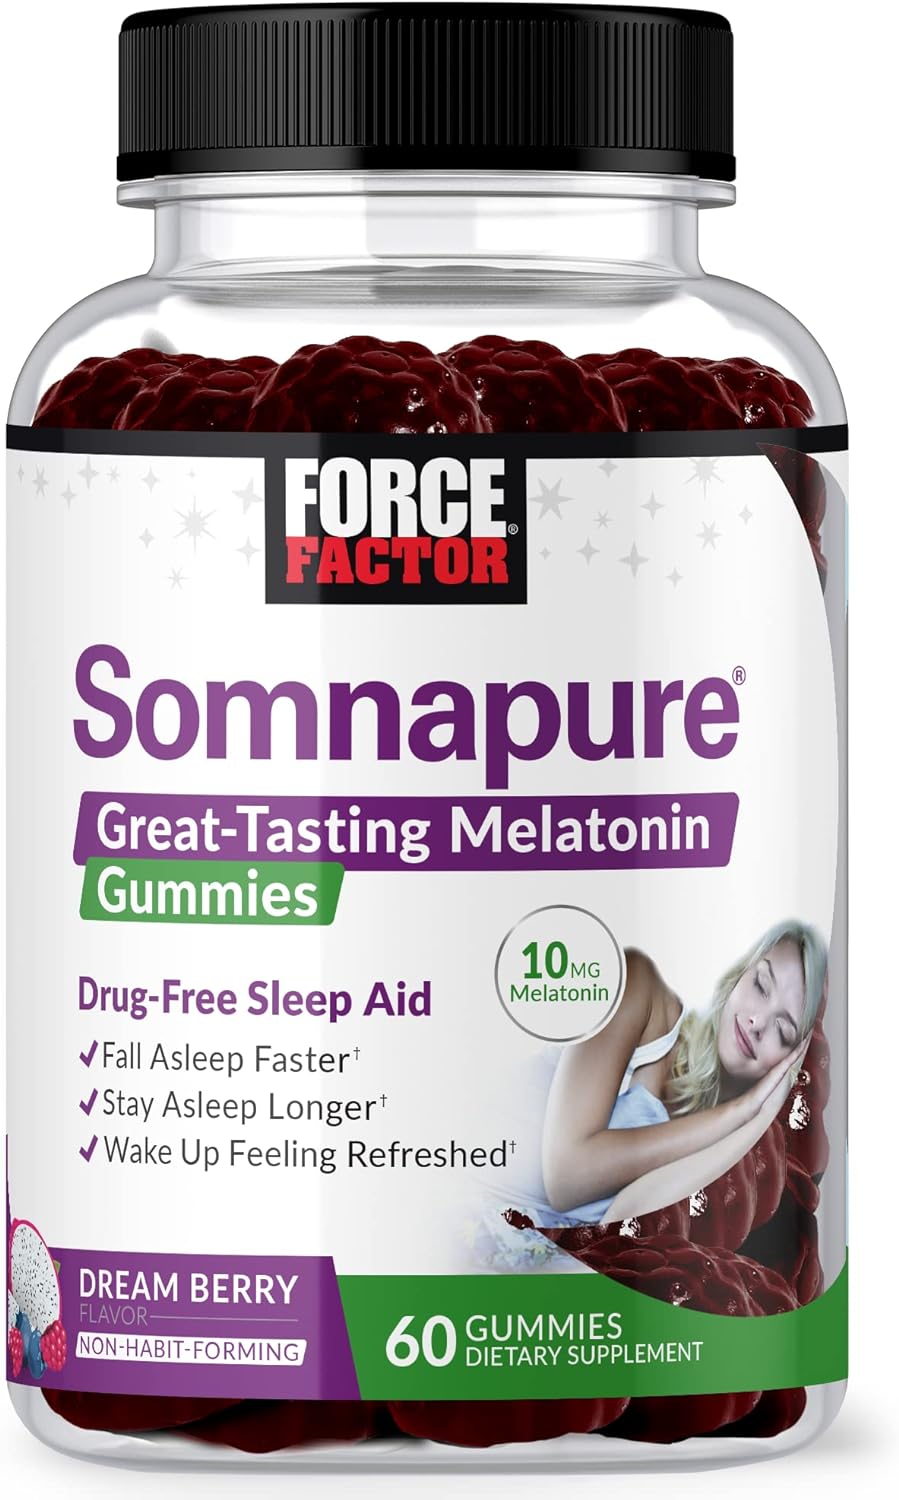 FORCE FACTOR Somnapure Gummies with Melatonin 10mg, Melatonin Gummies, Dream Berry Flavor, 60 Gummies, Purple (FFS-00849-FG)